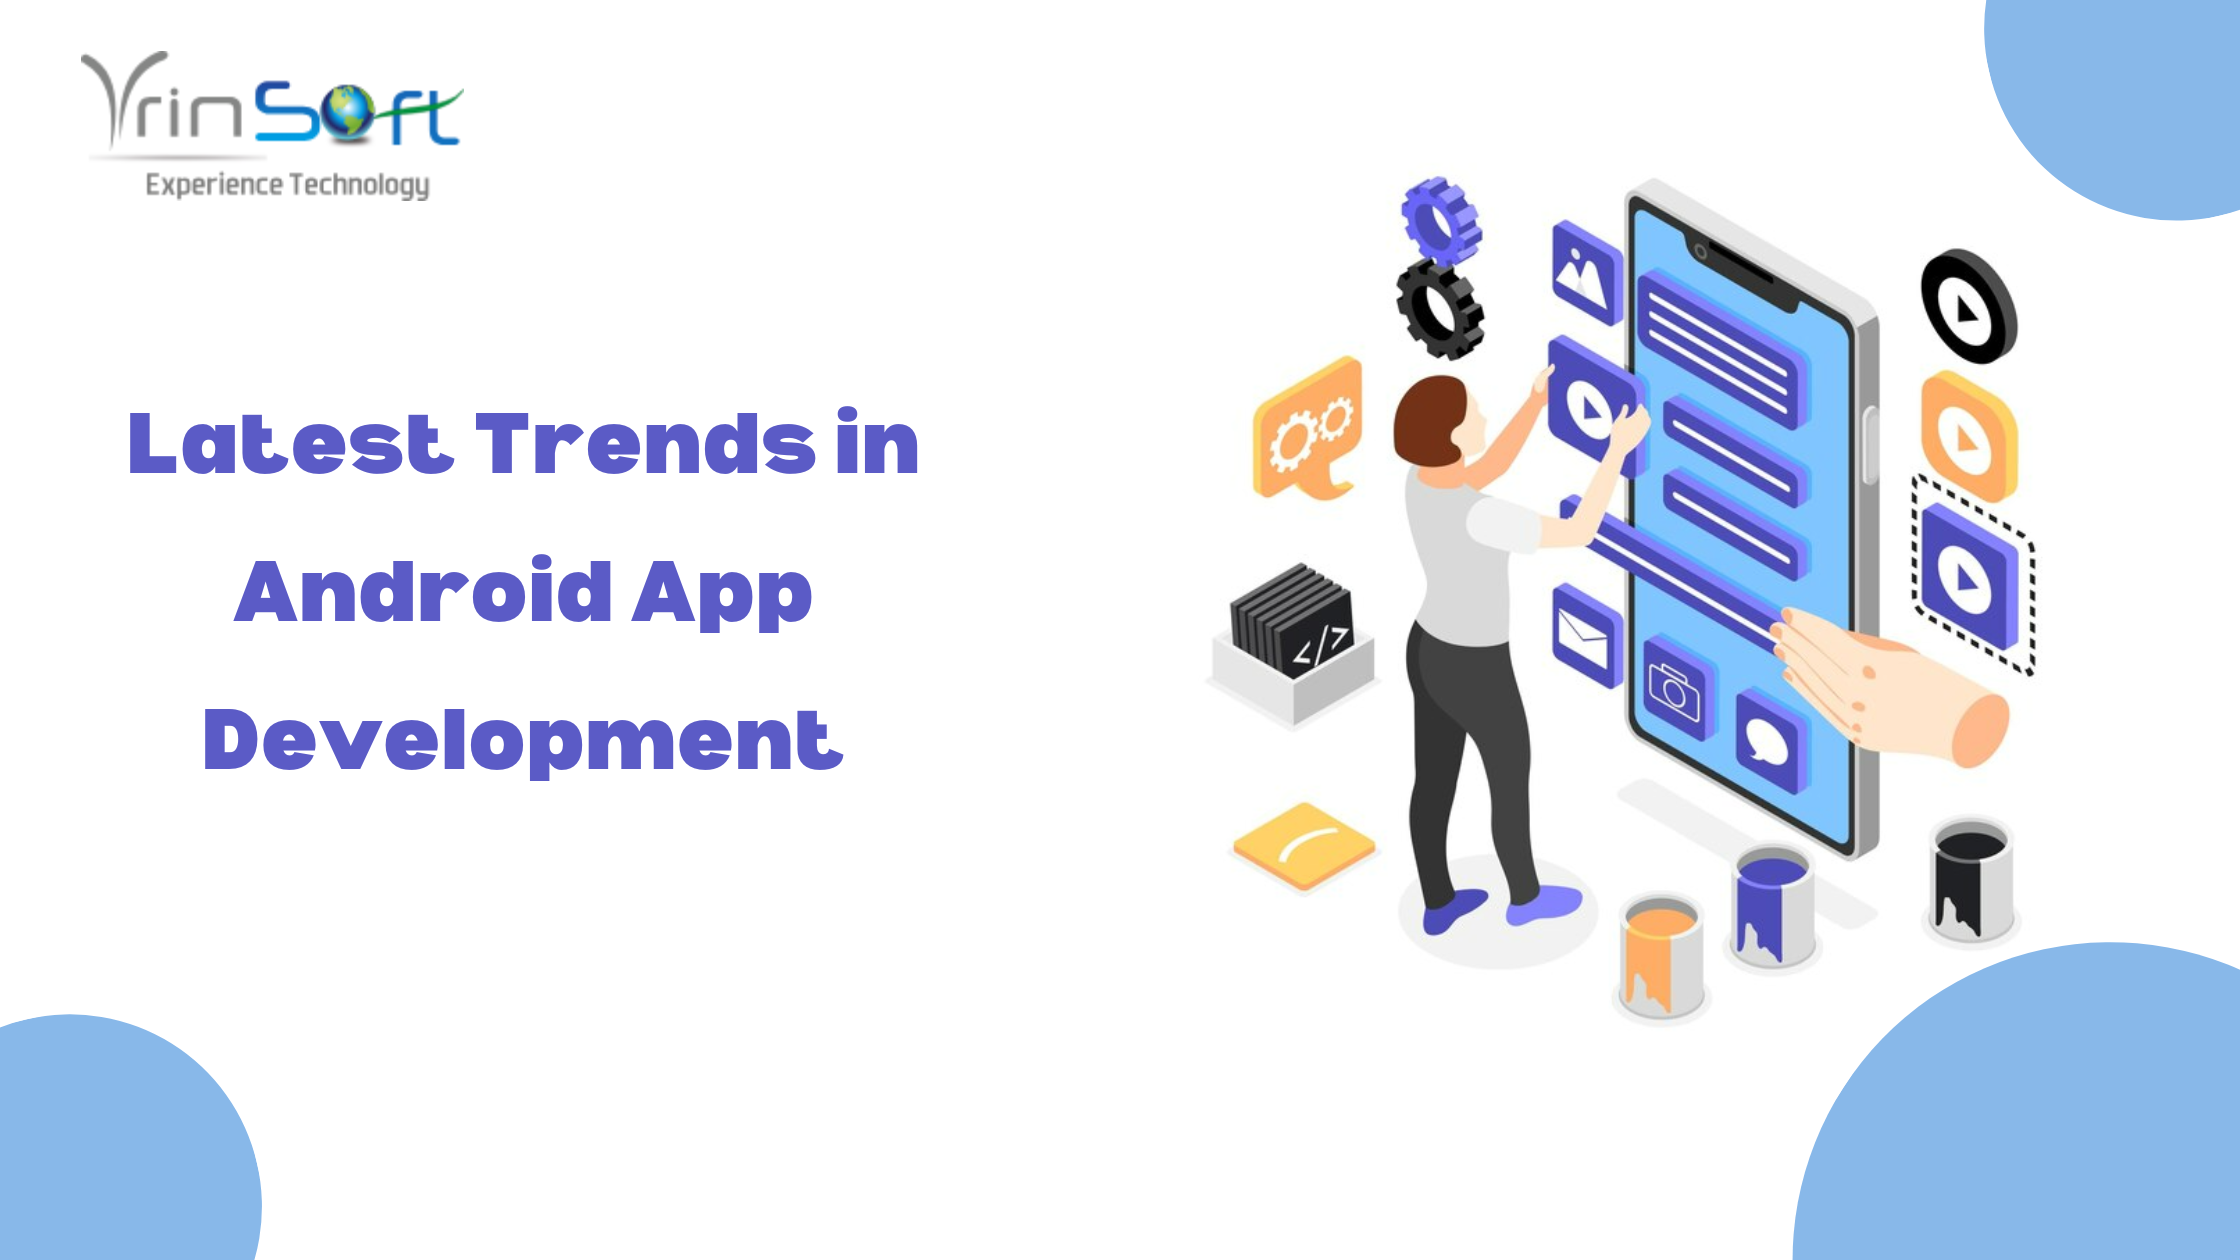 Android app development trends